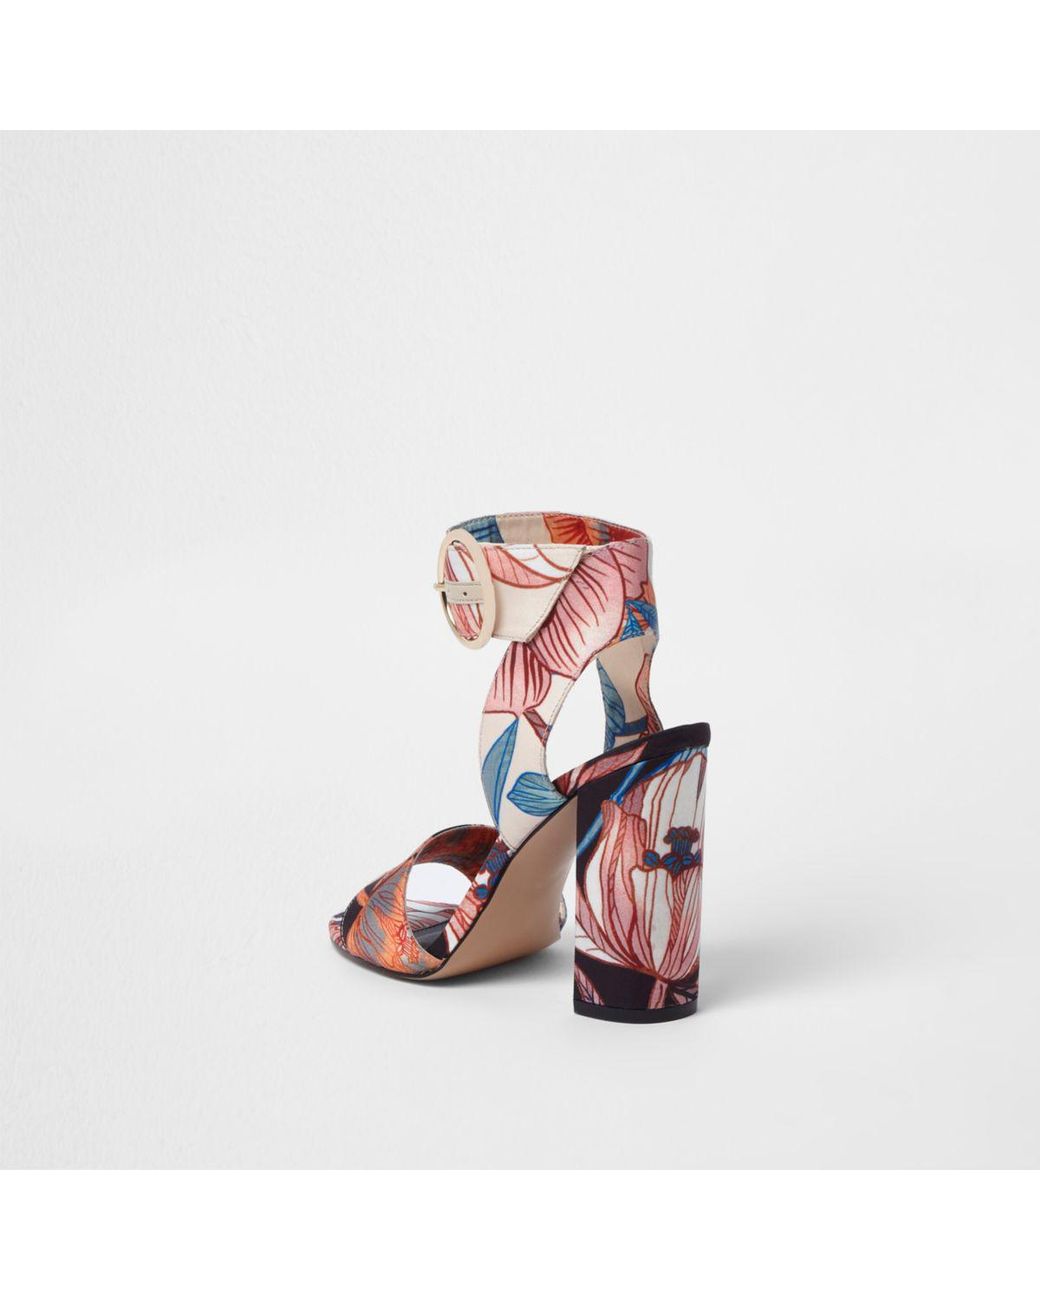 Lorelai Block Heeled Sandal Shoes in Fuschia Floral Multi - Get great deals  at JustFab